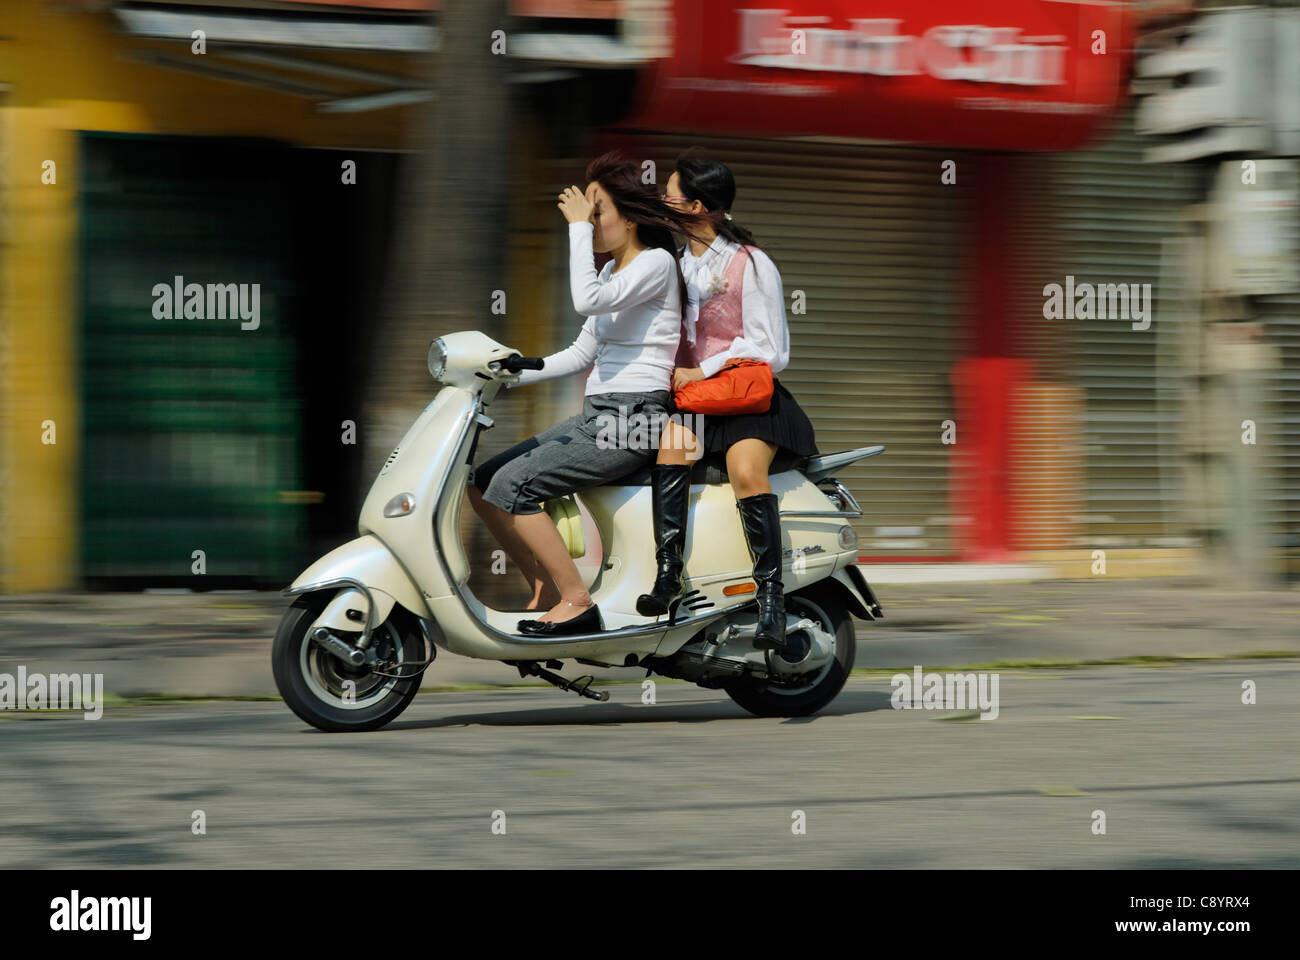 Asia, Vietnam, Hanoi. Hanoi old quarter. Two women on Vespa motorbike rushing through Hanoi.... Stock Photo